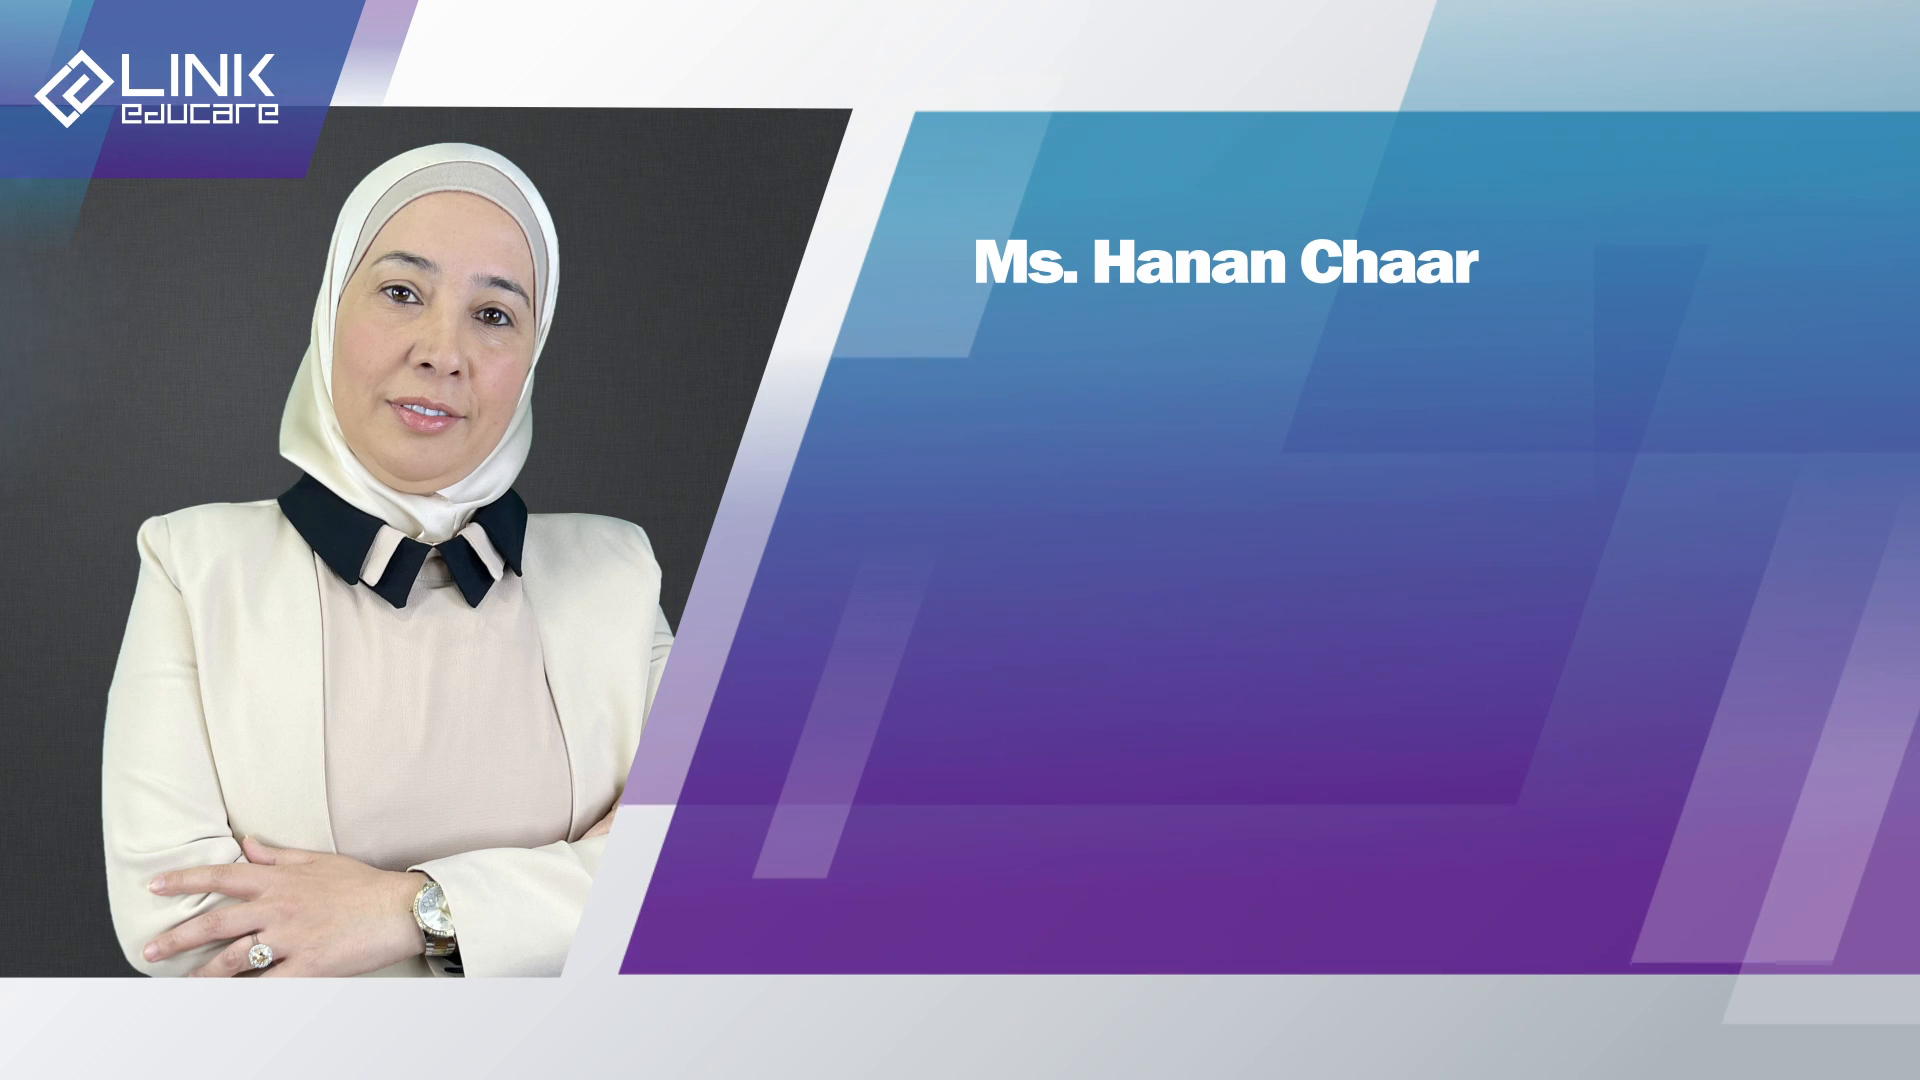 Ms. Hanan Chaar